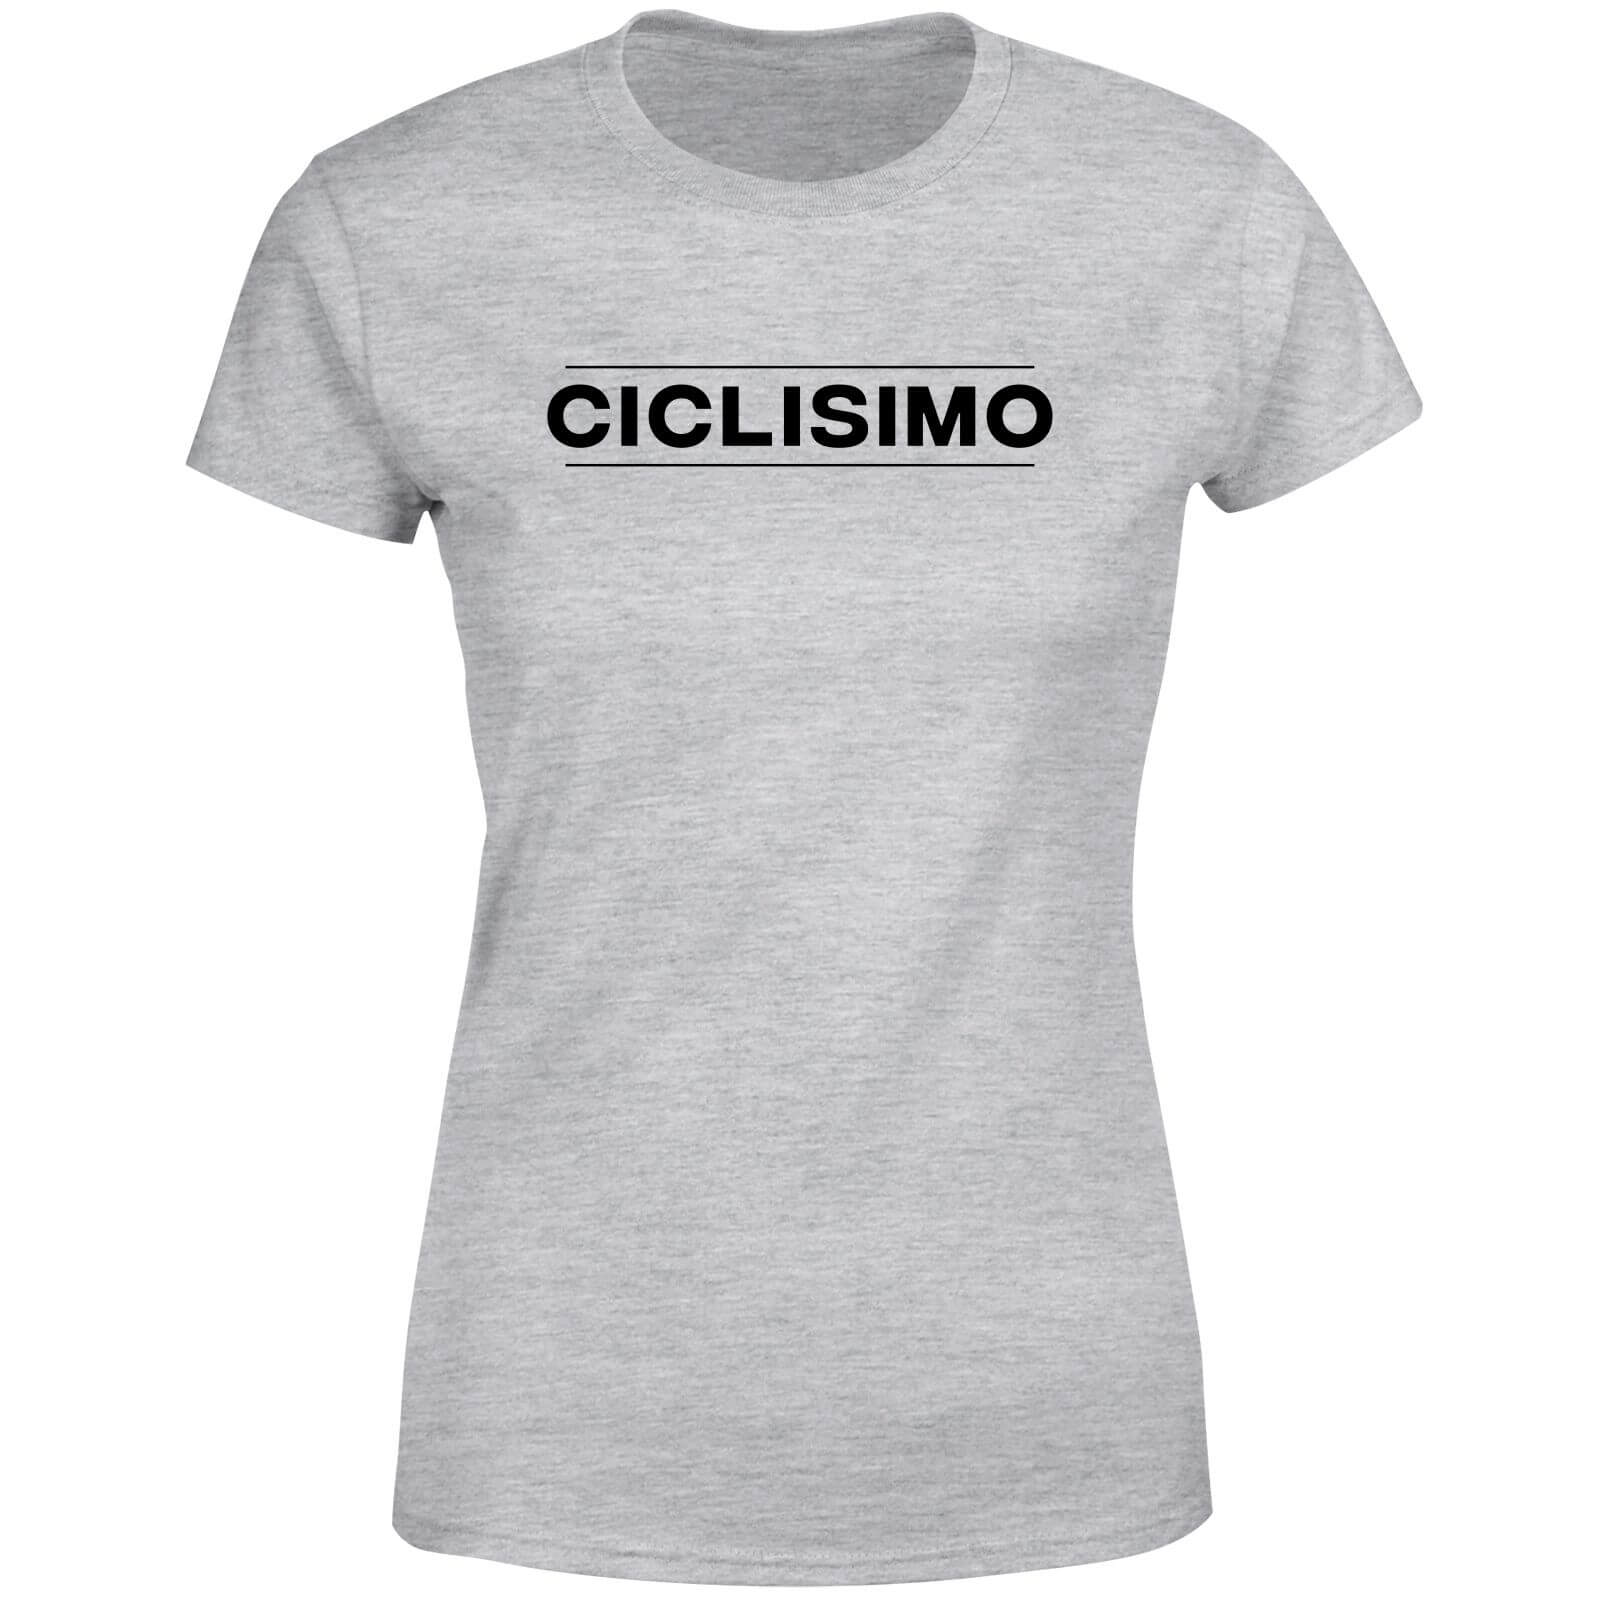 Ciclisimo Women's T-Shirt - Grey - XXL - Grey